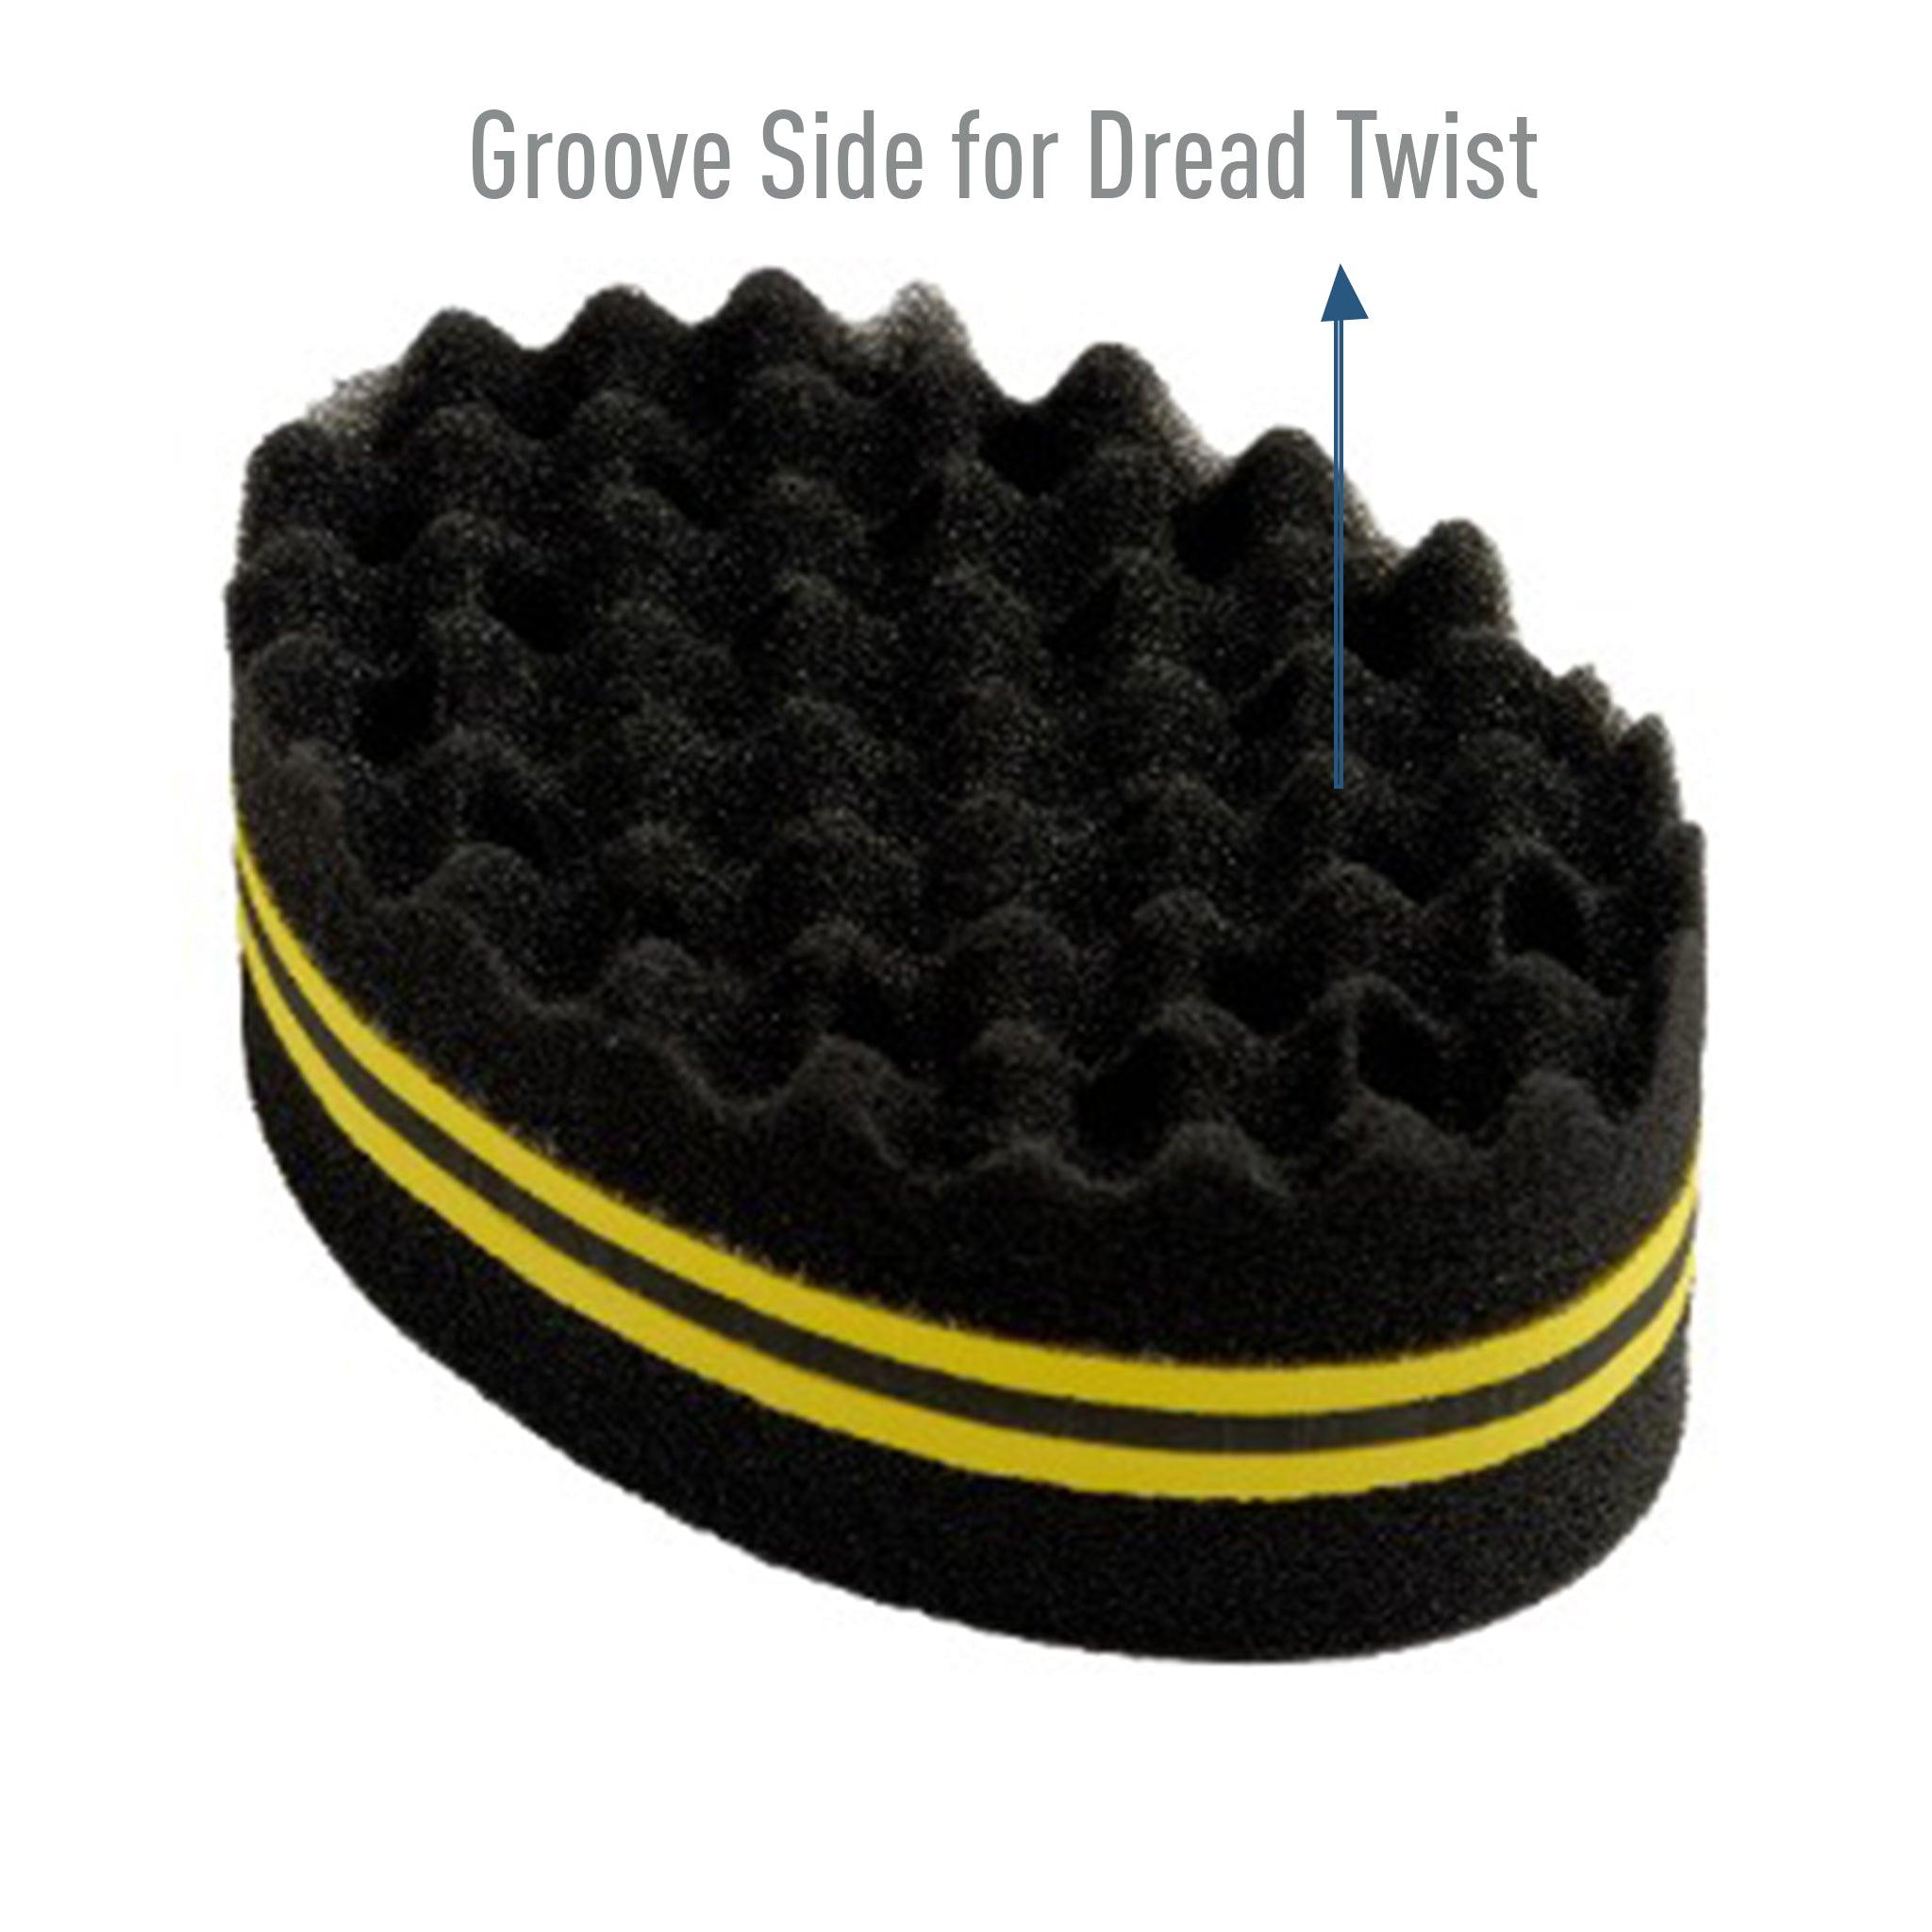 The Sponge Twist Kit